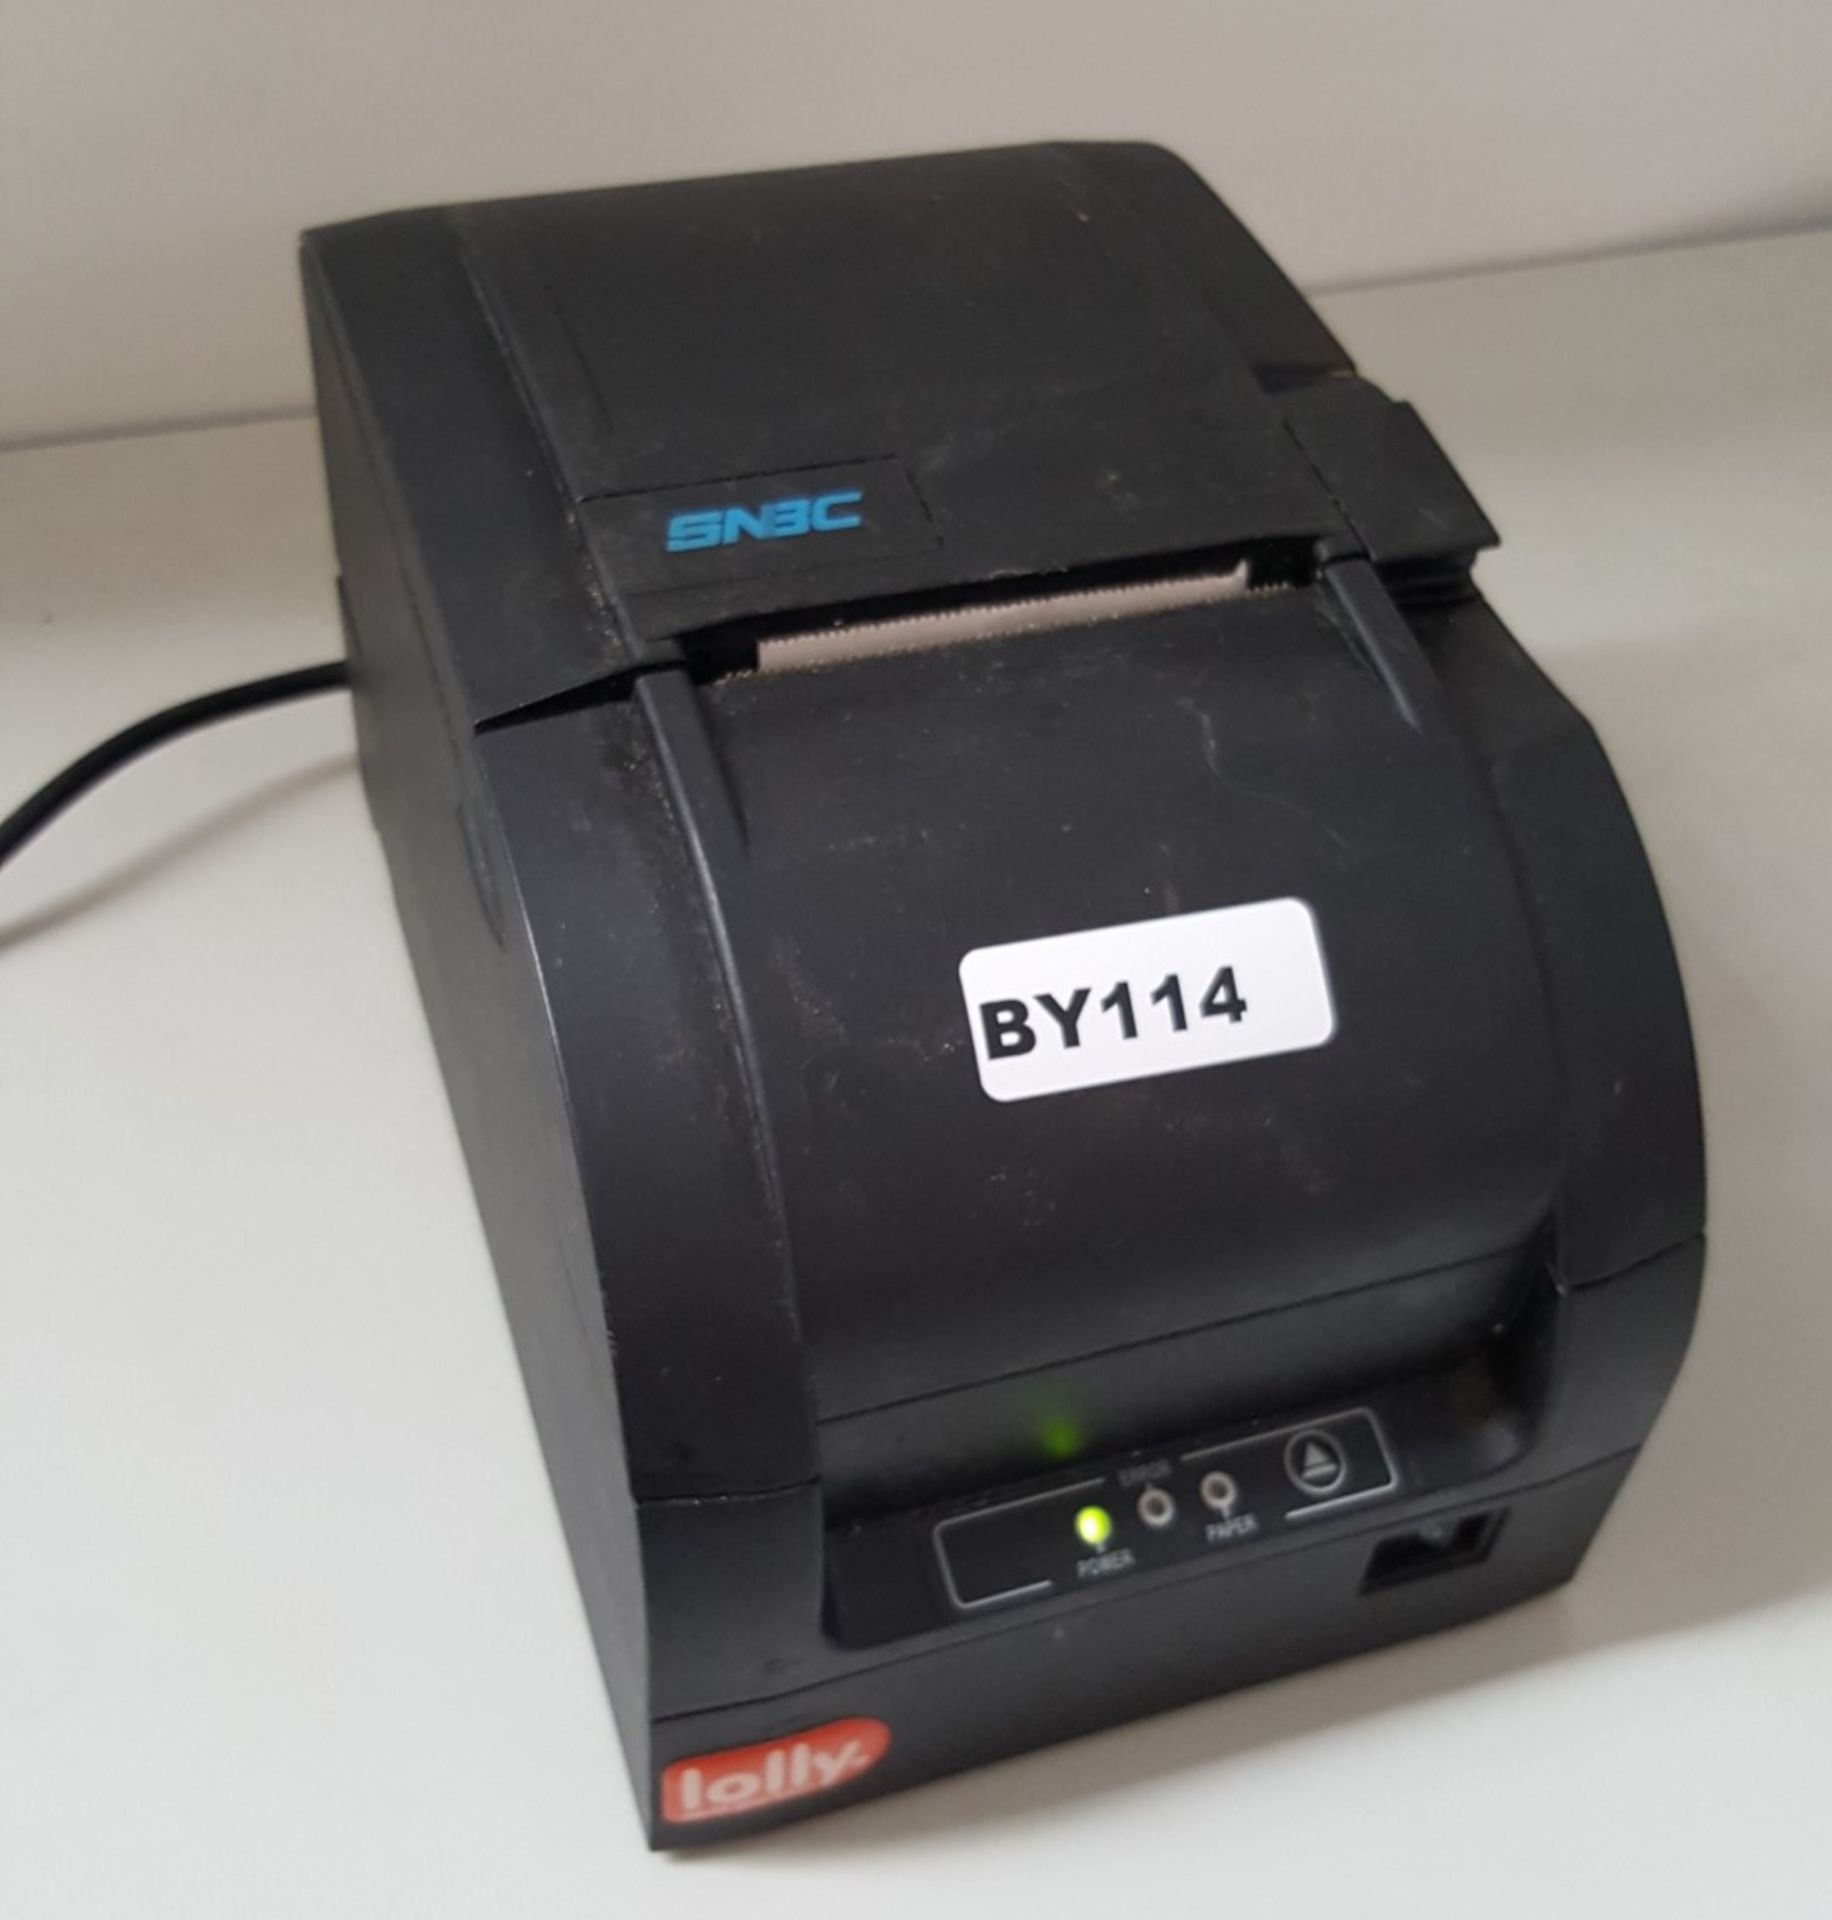 1 x SNBC Ethernet/USB Receipt Printer BTP-M300 Black - Ref BY114 AC3